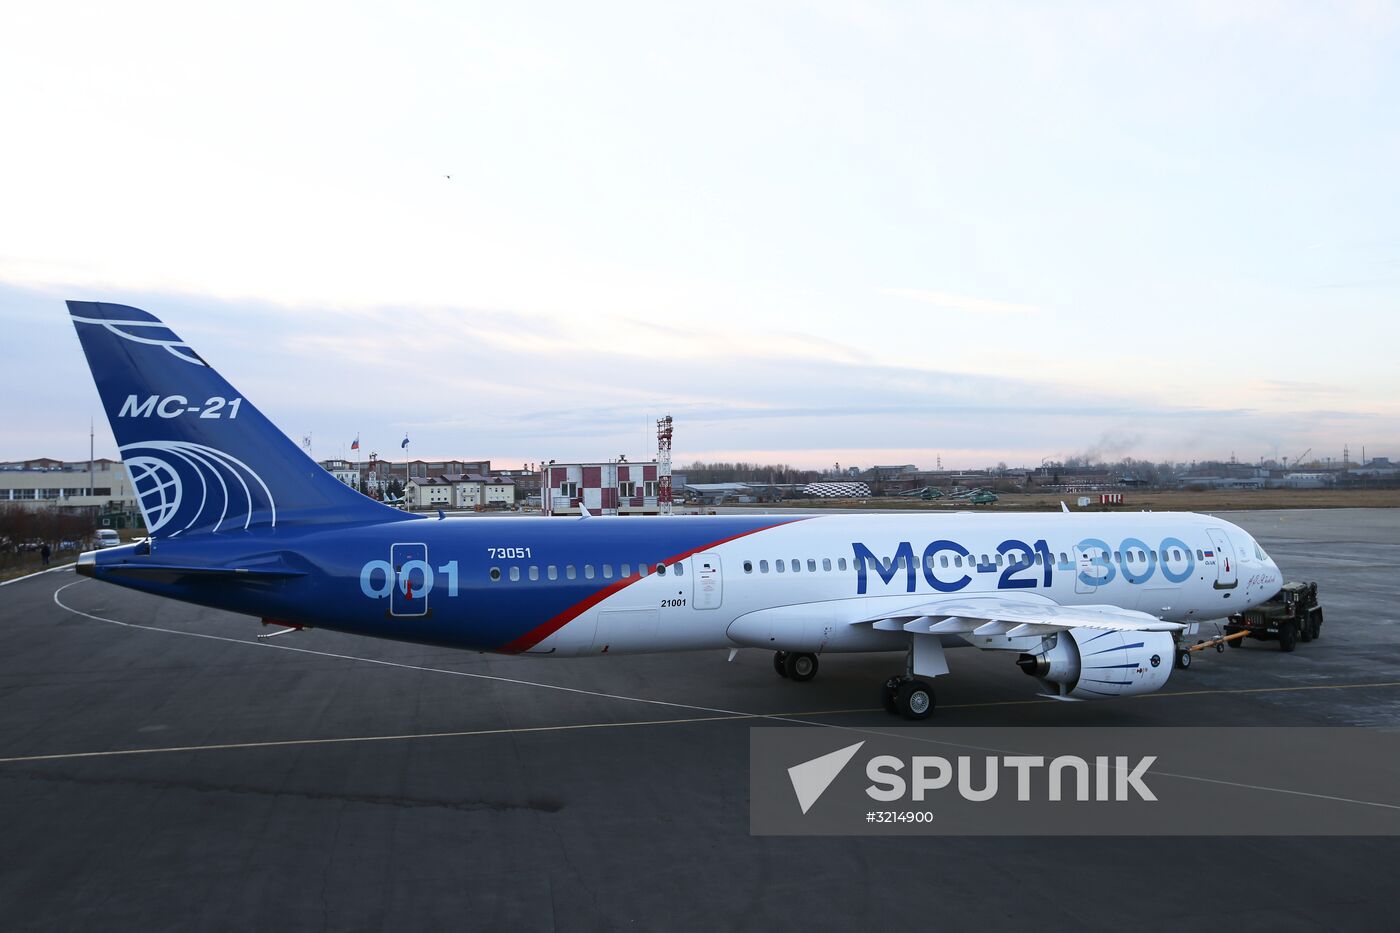 MC-21 aircraft performs its first flight from Irkutsk to Zhukovsky